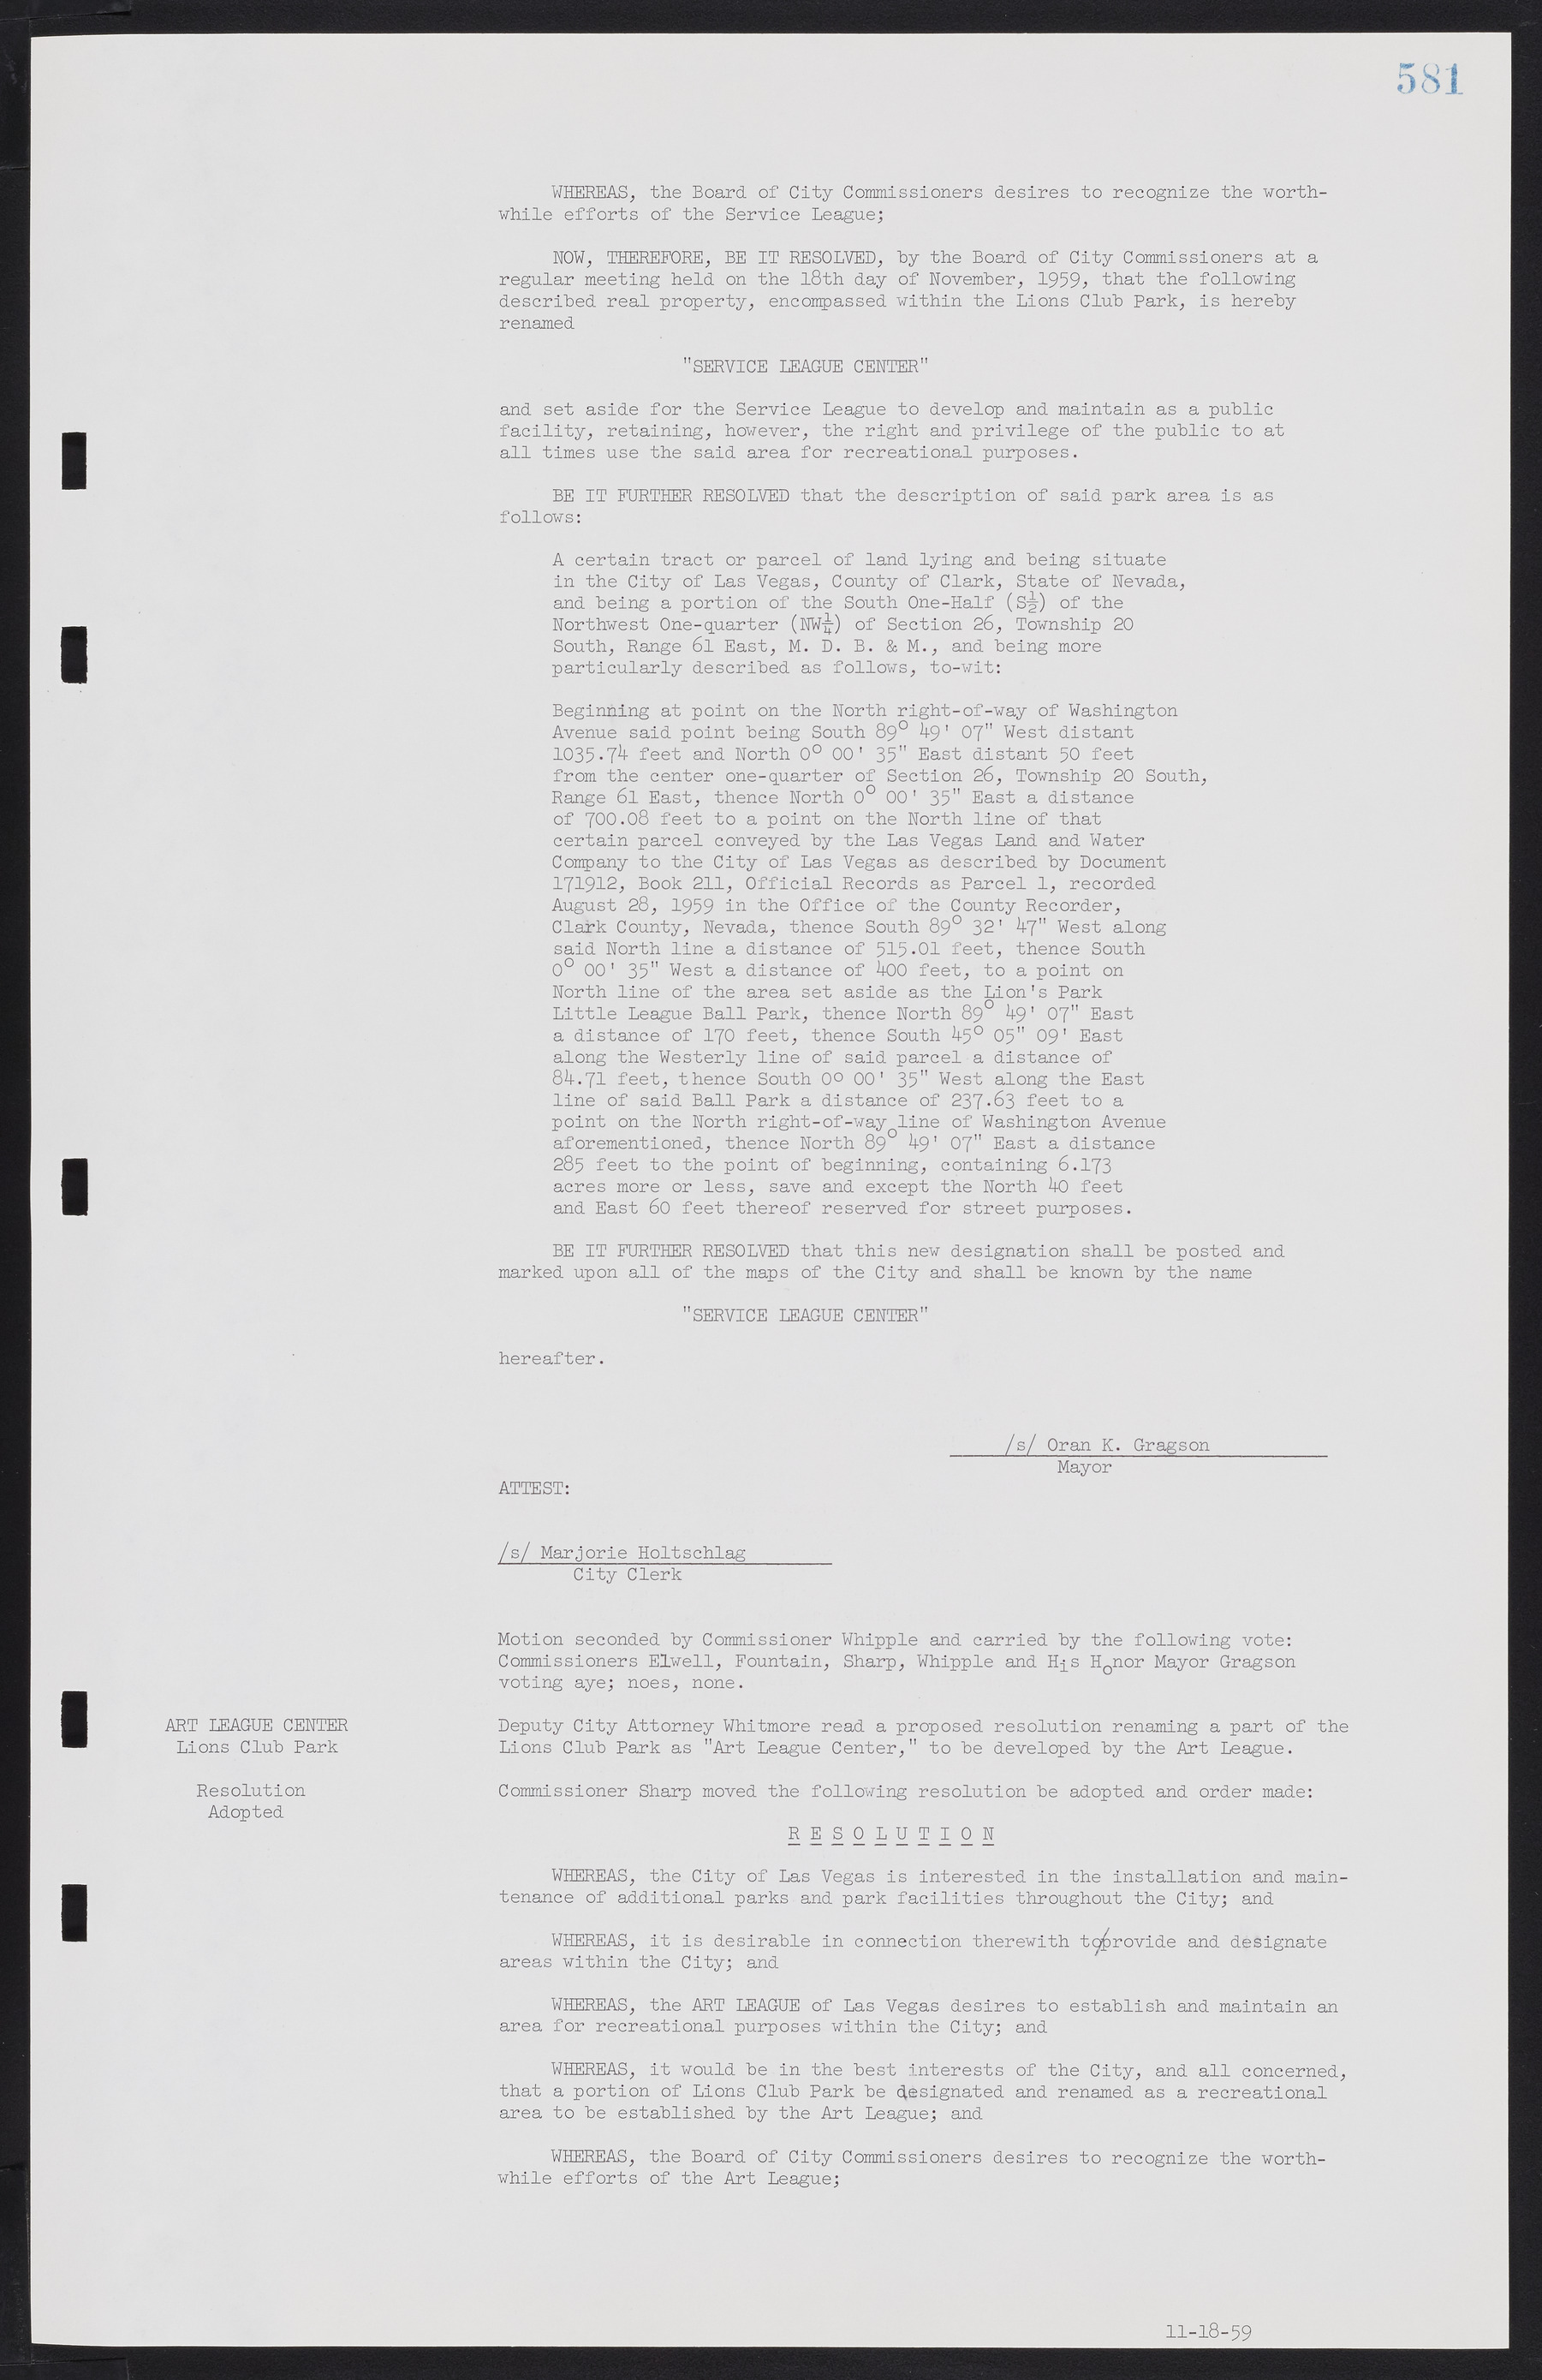 Las Vegas City Commission Minutes, November 20, 1957 to December 2, 1959, lvc000011-617